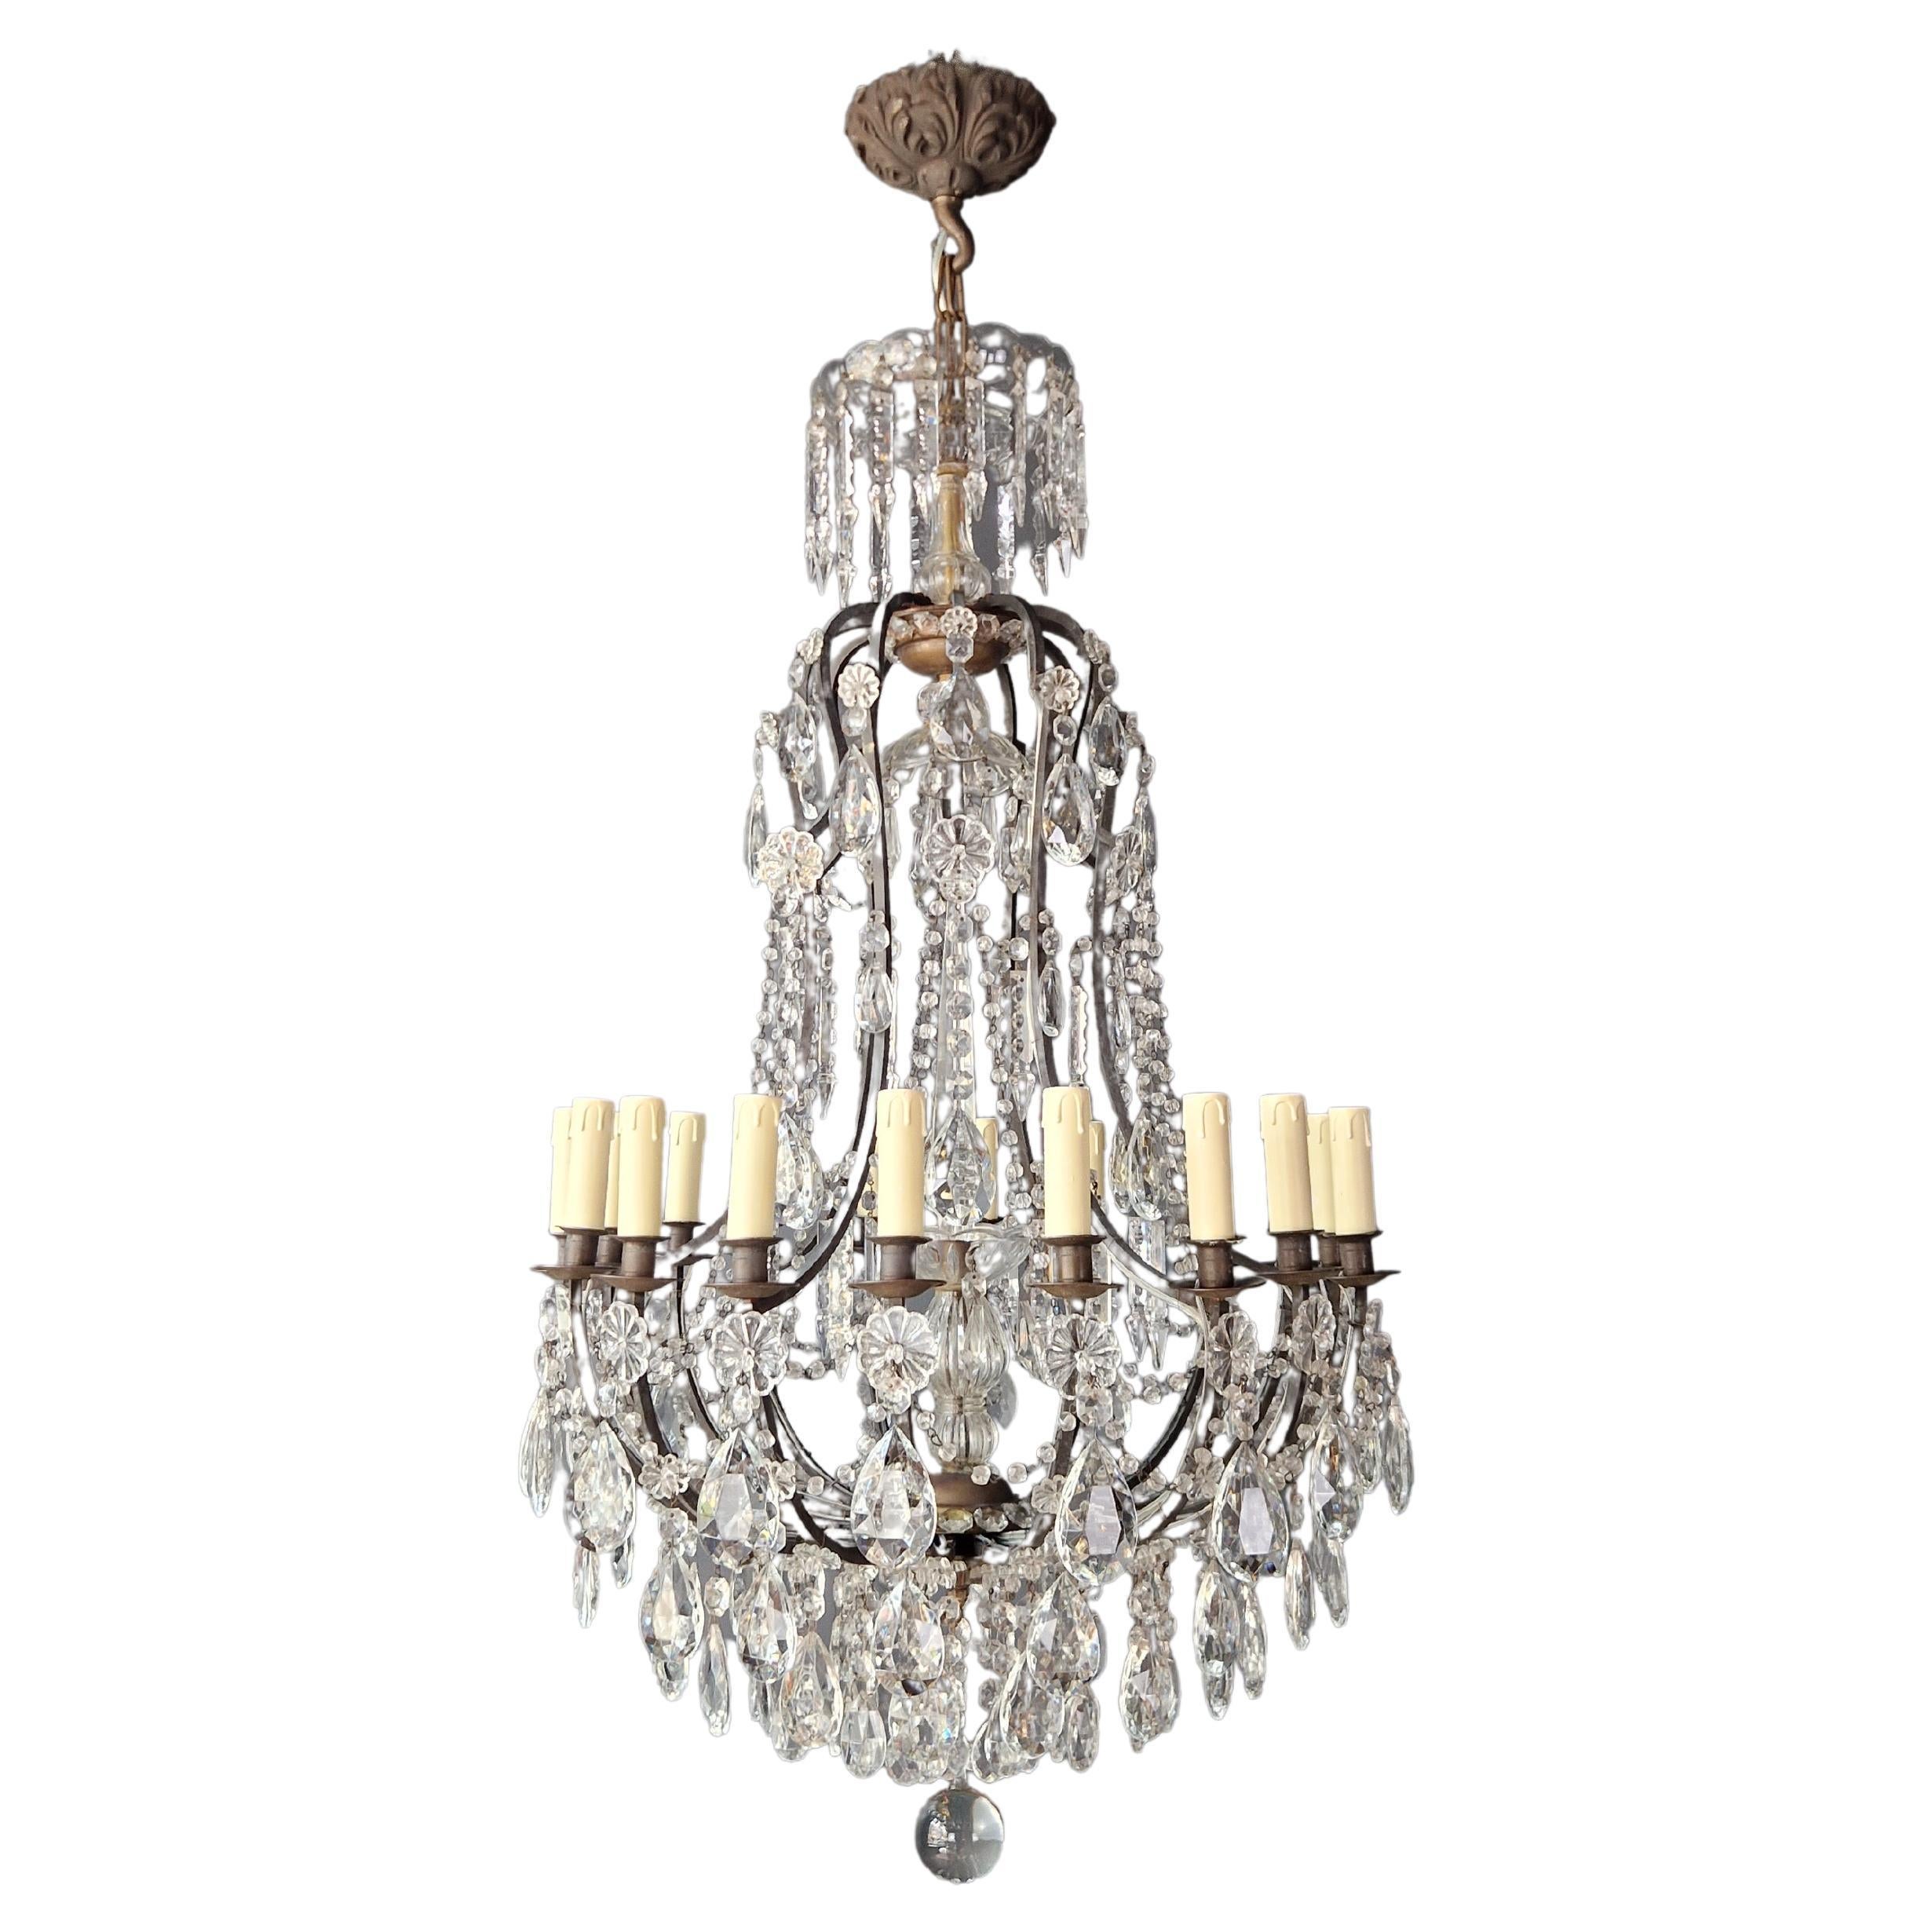 Antique French Crystal Chandelier Ceiling Lamp Lustre Art Nouveau Lamp For Sale